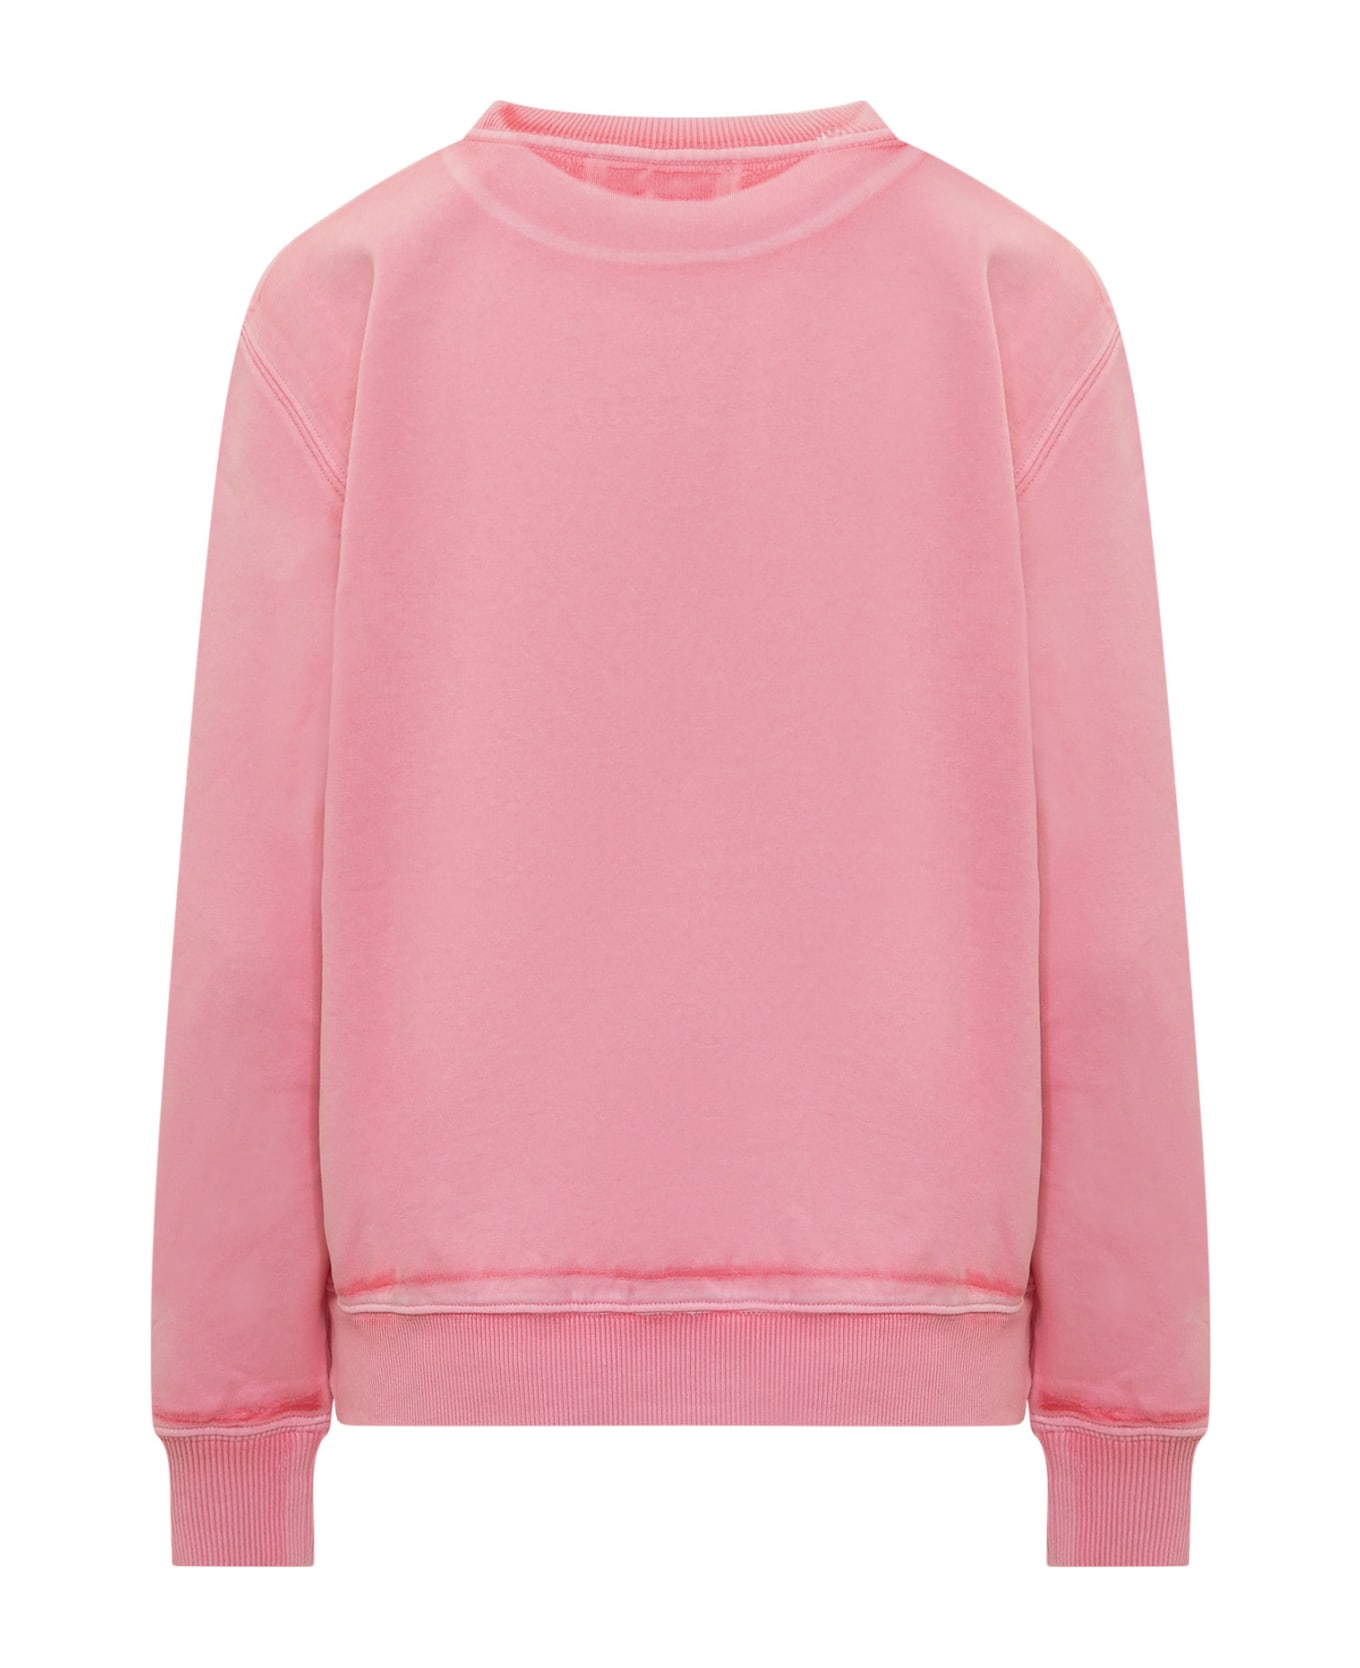 Lanvin Overprinted Sweatshirt - PEONY PINK